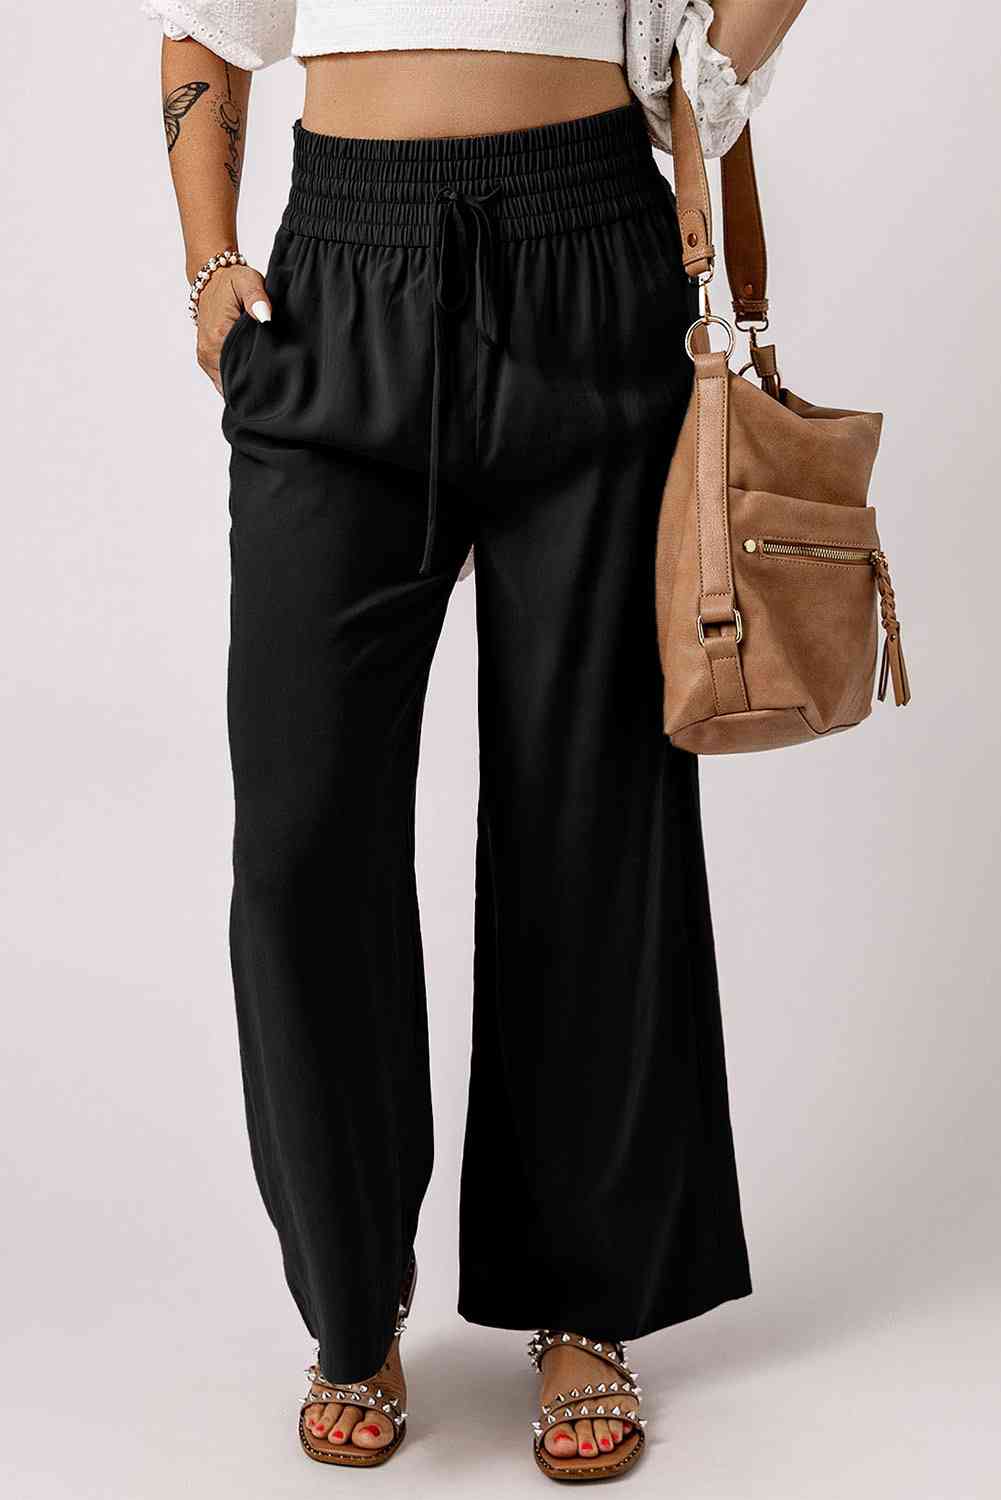 Drawstring Smocked Waist Wide Leg Pants (3 Colors) pants Krazy Heart Designs Boutique Black S 